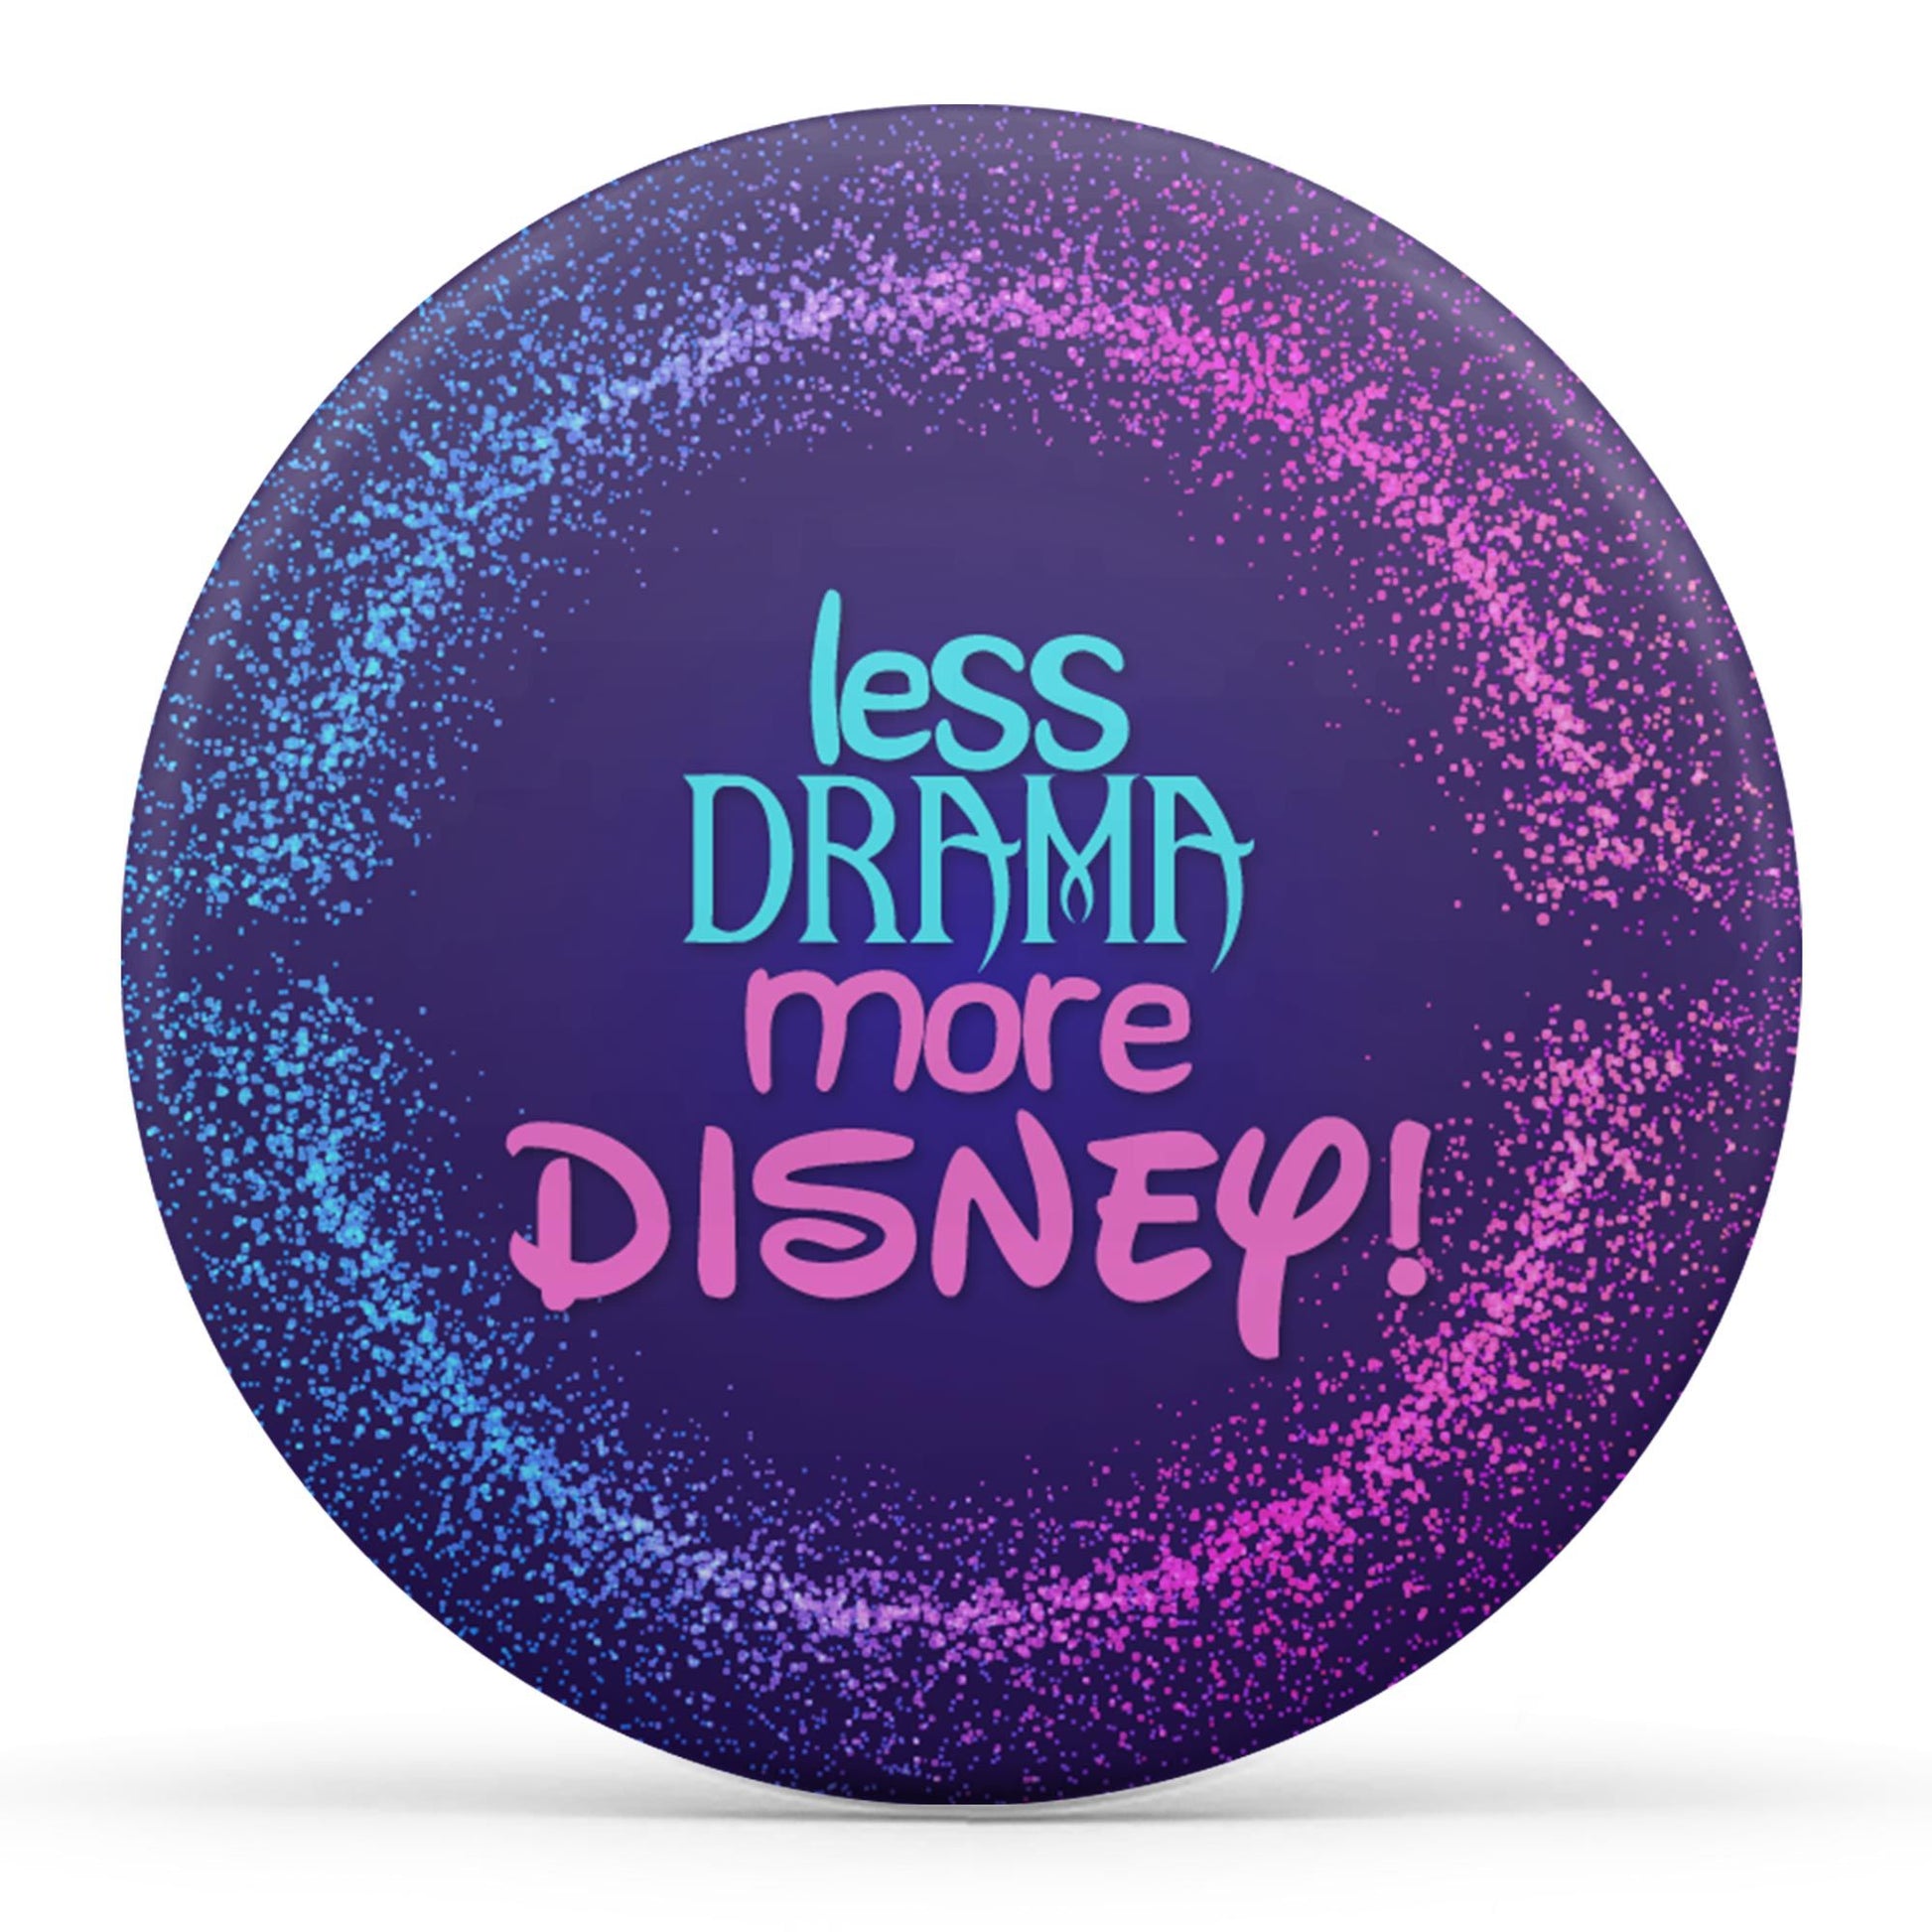 Less Drama More Disney Image